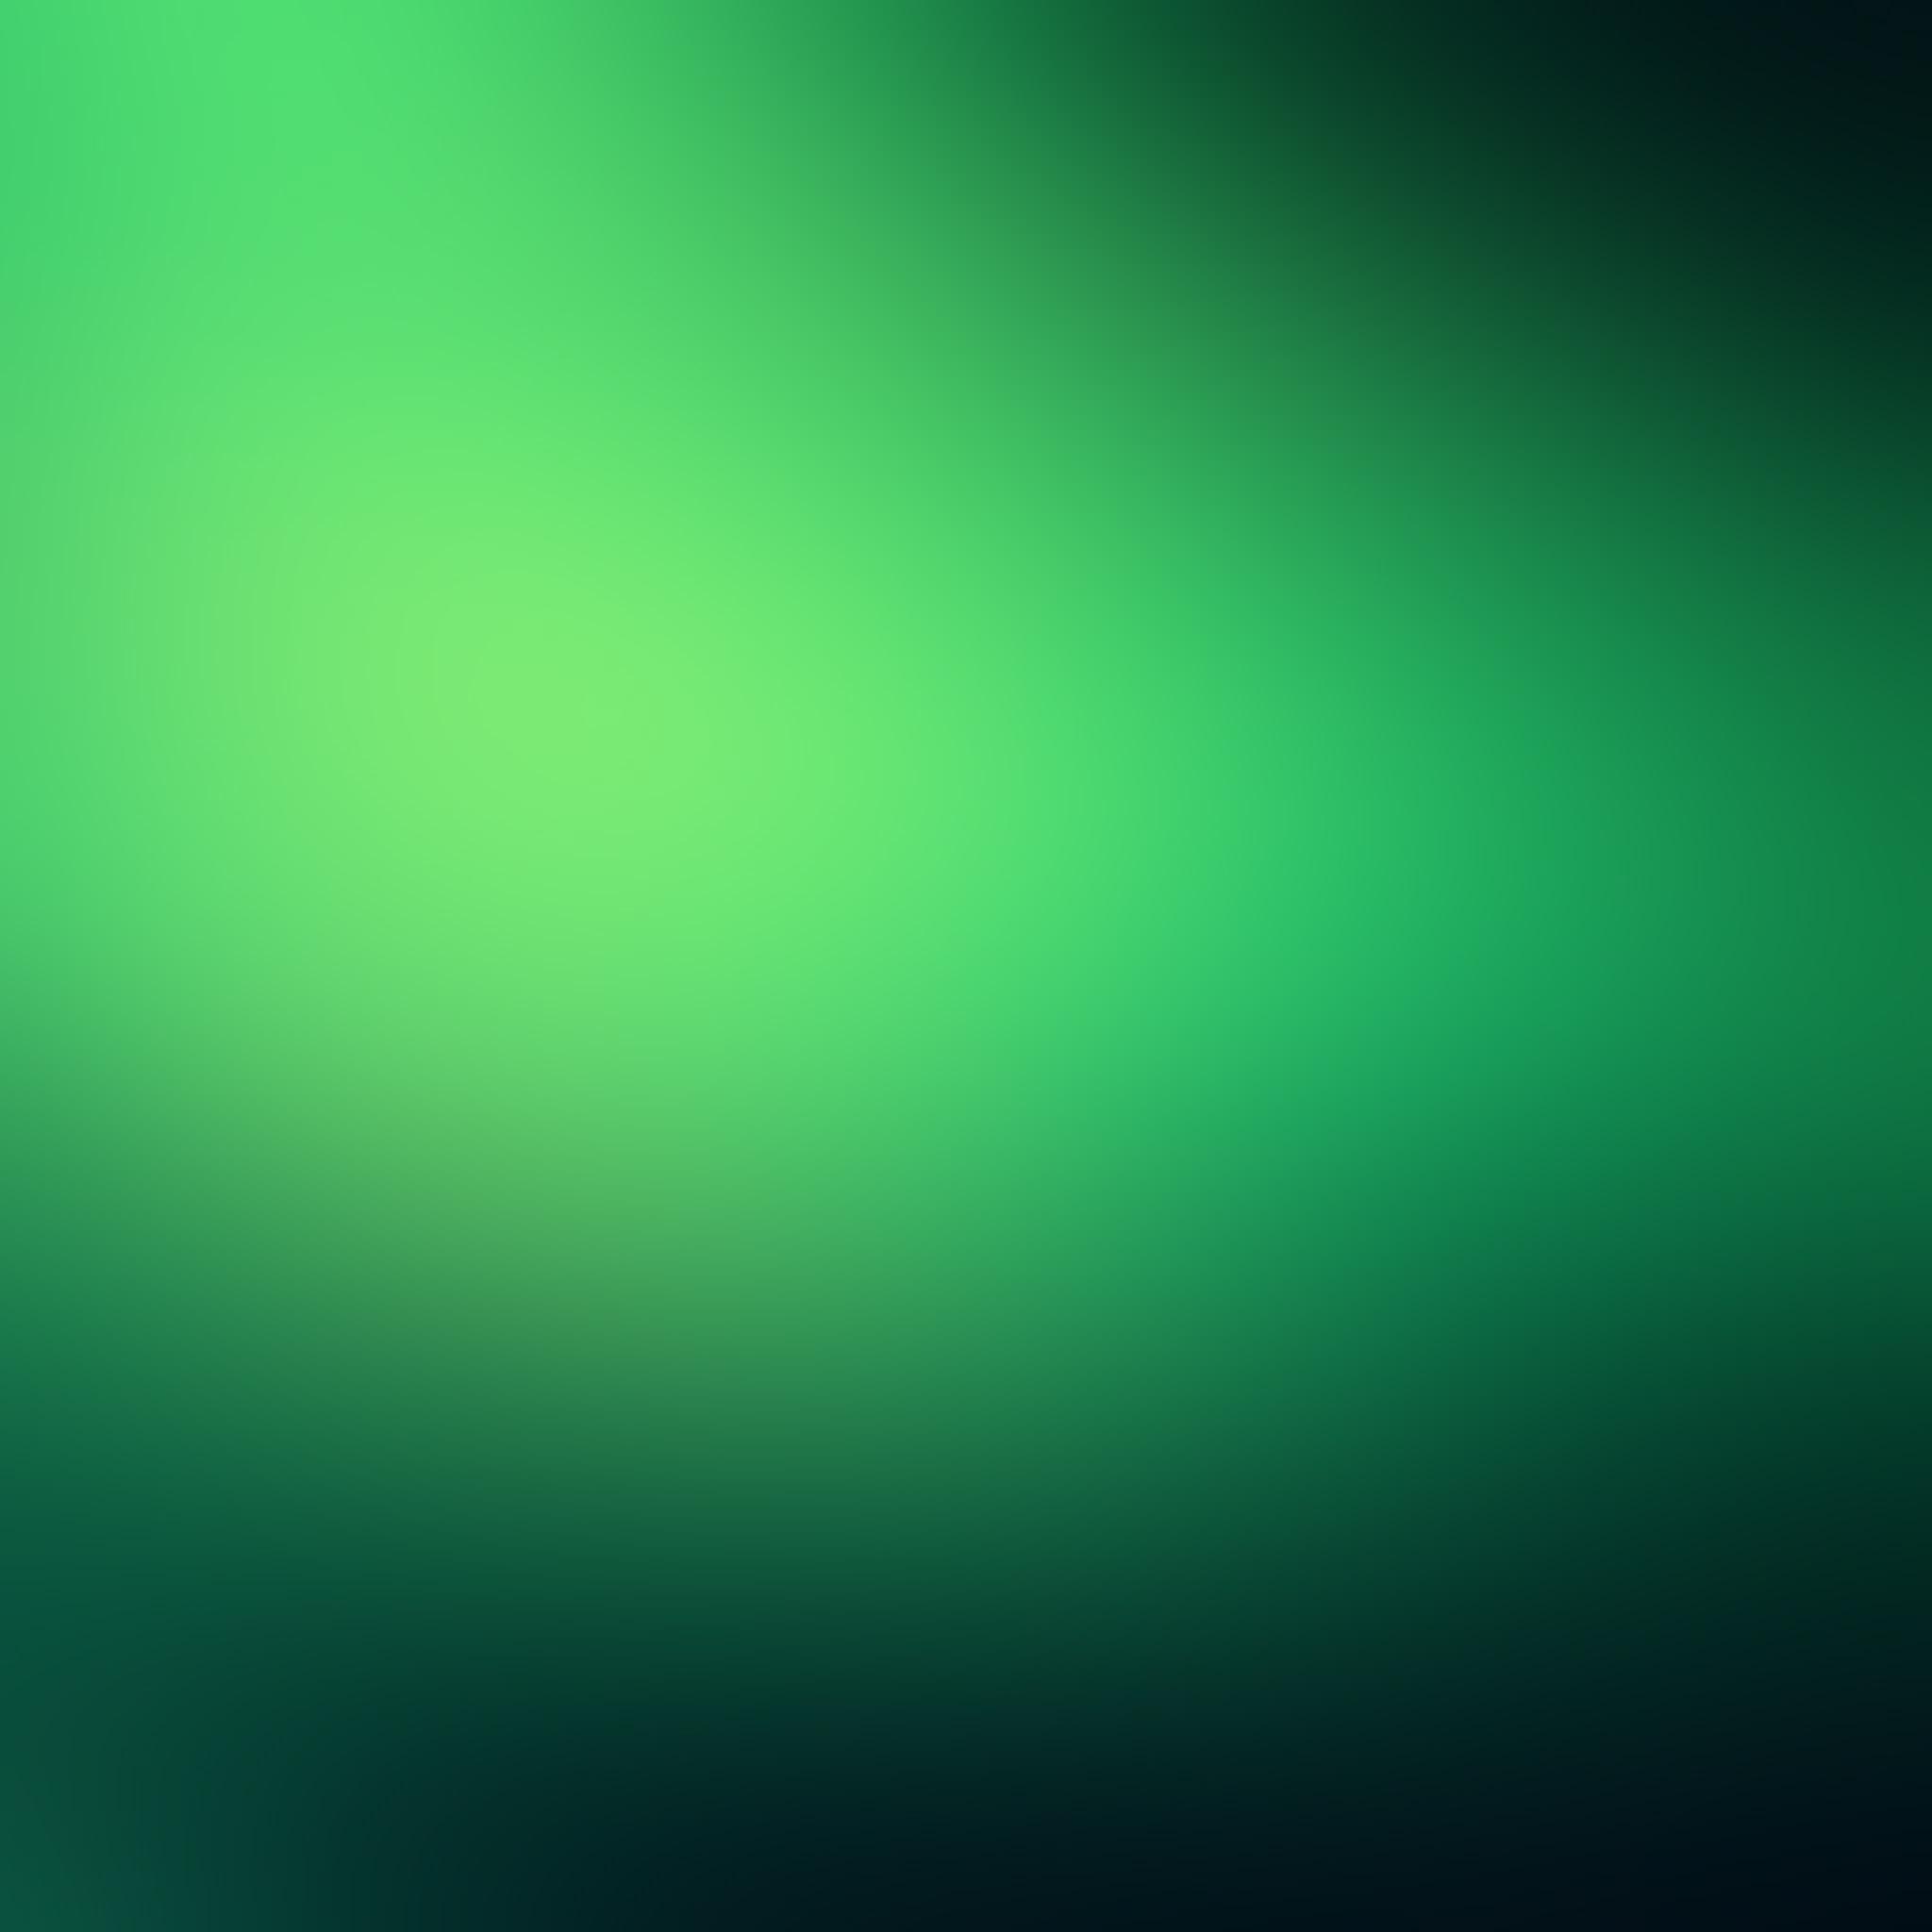 Background Retro Green Lantern Background iPad iPhone HD